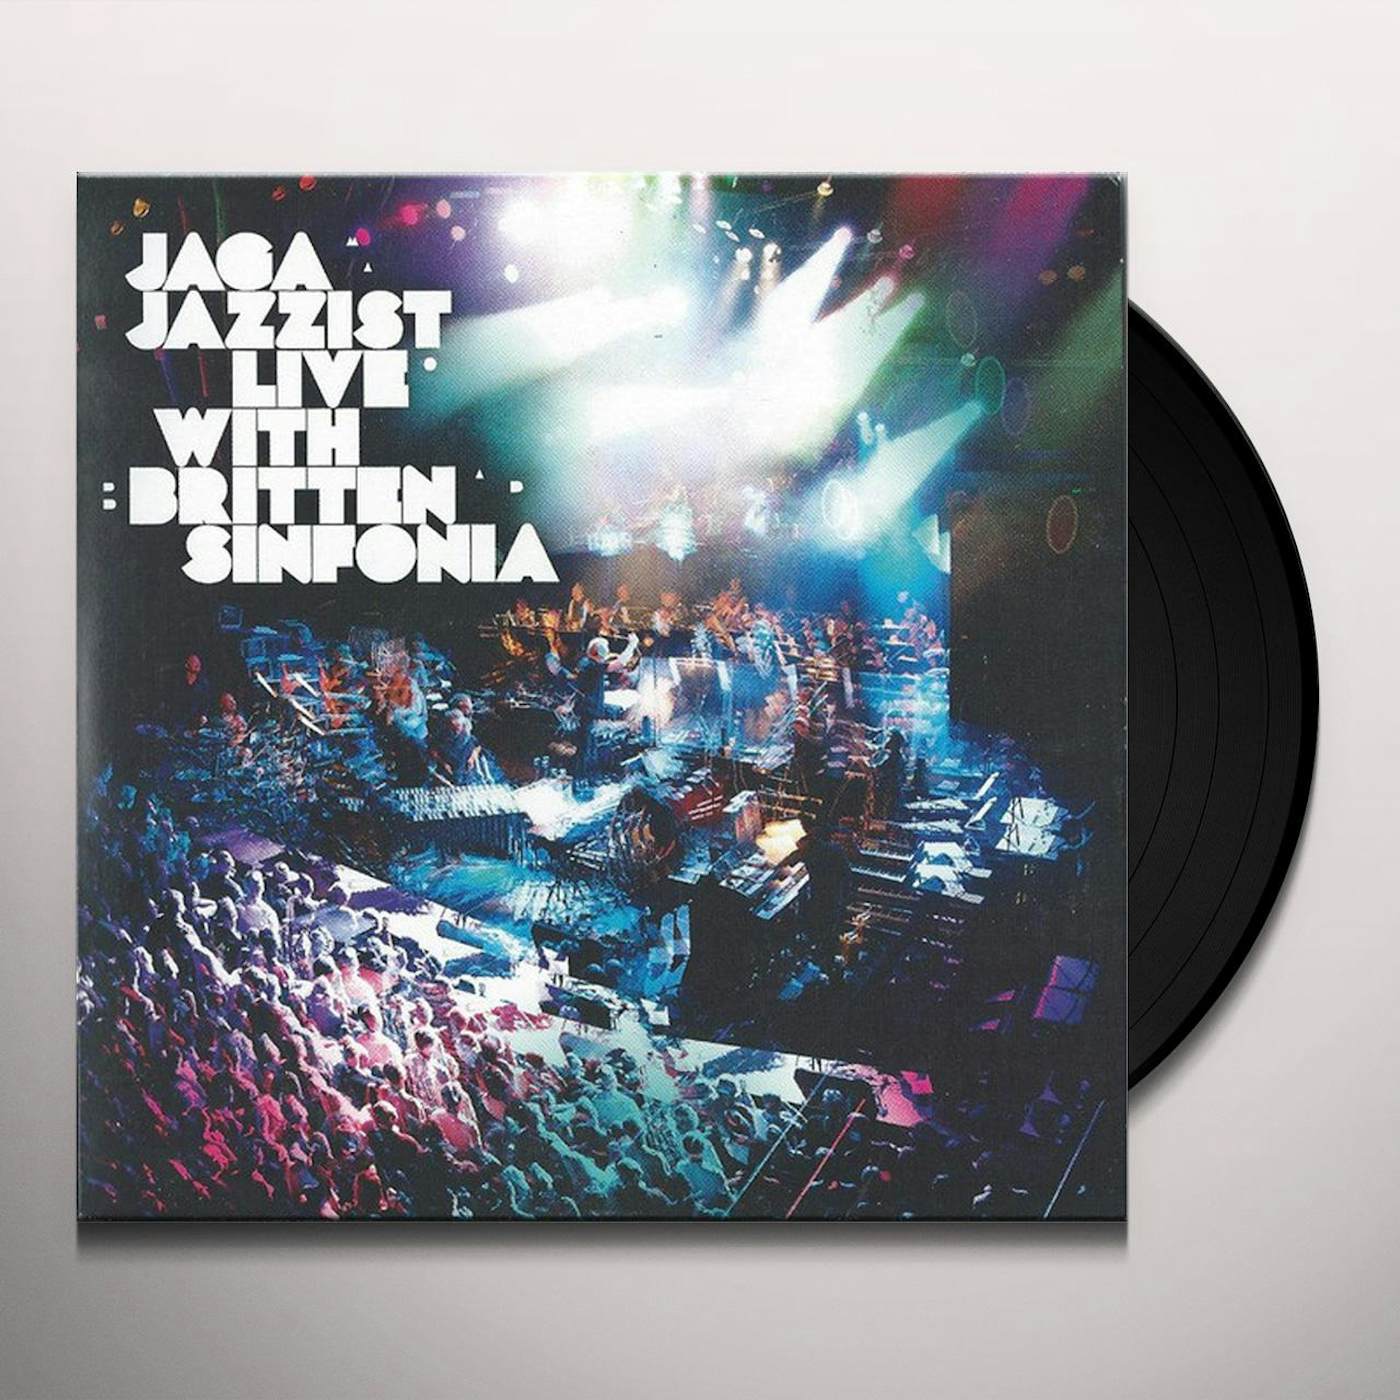 Jaga Jazzist Live With The Britten Sinfonia Vinyl Record